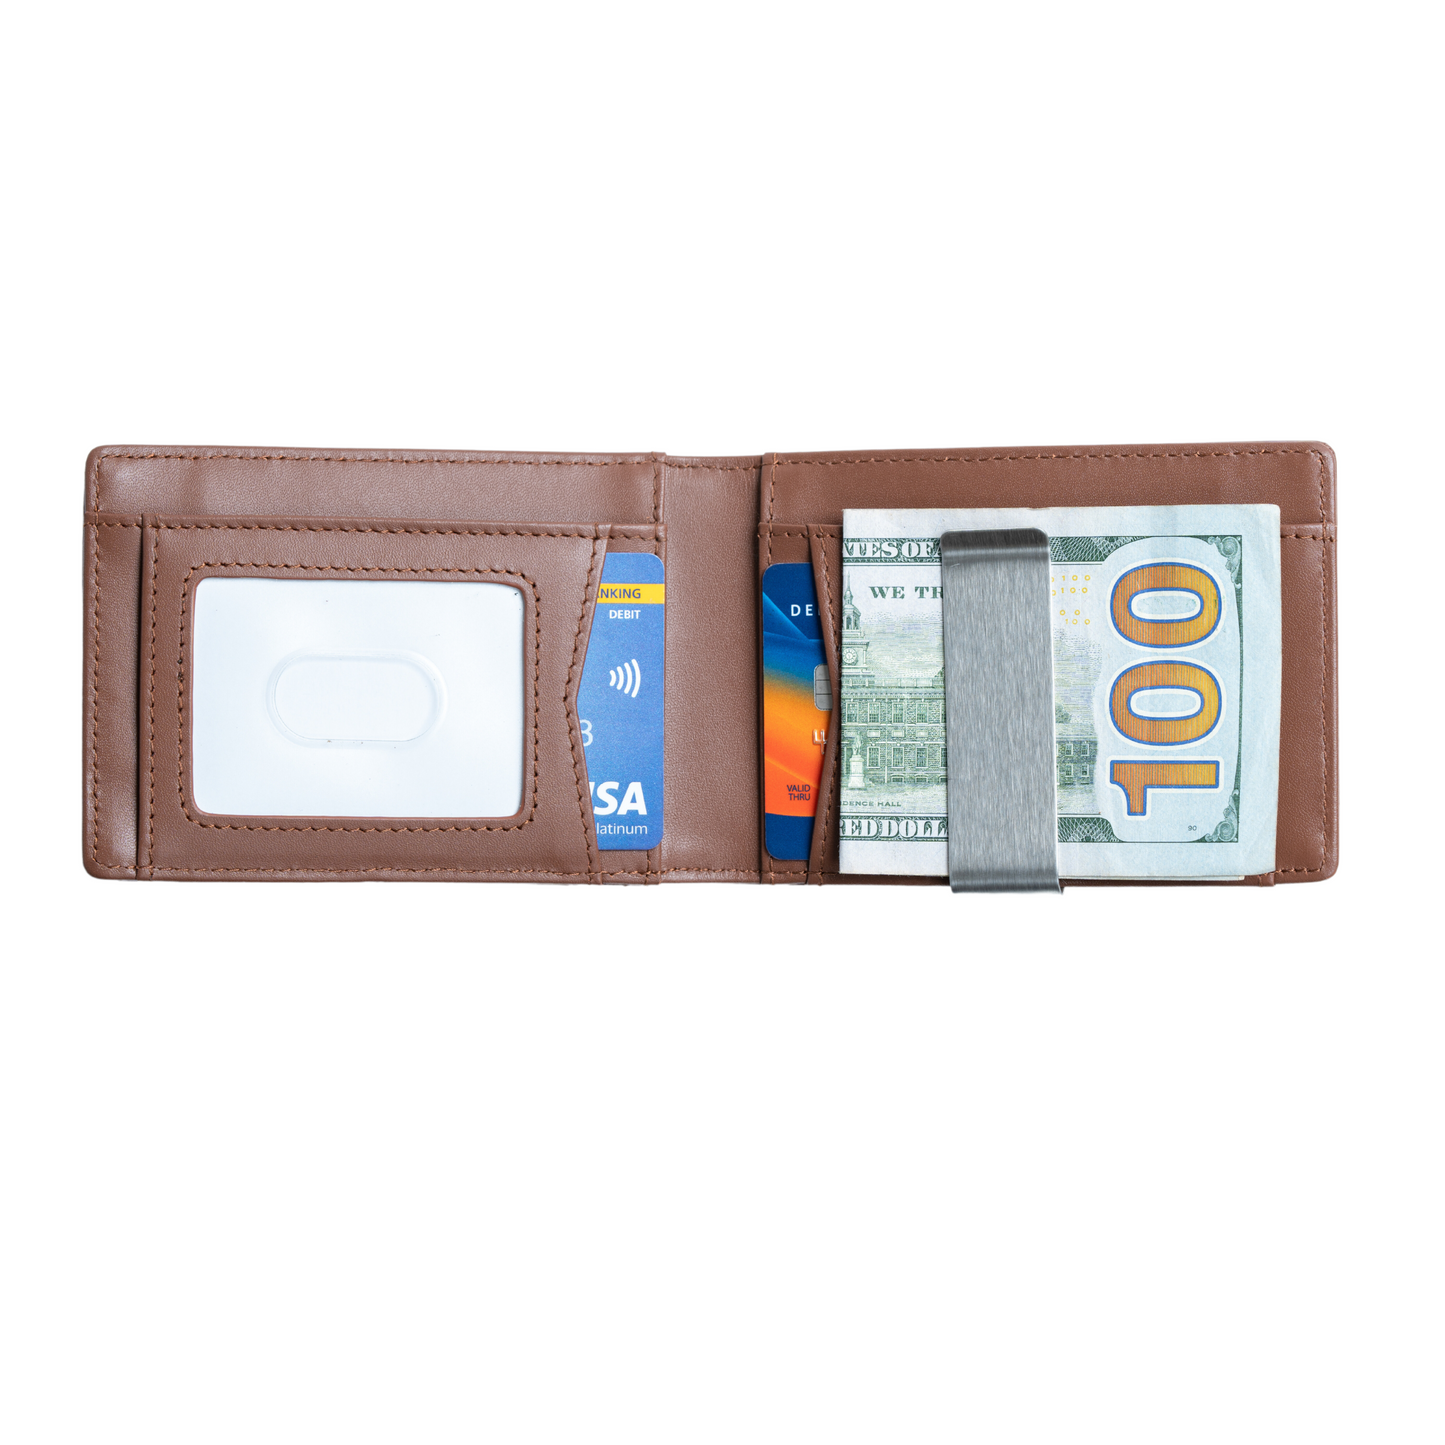 PRESTIGE BROWN - Wallet